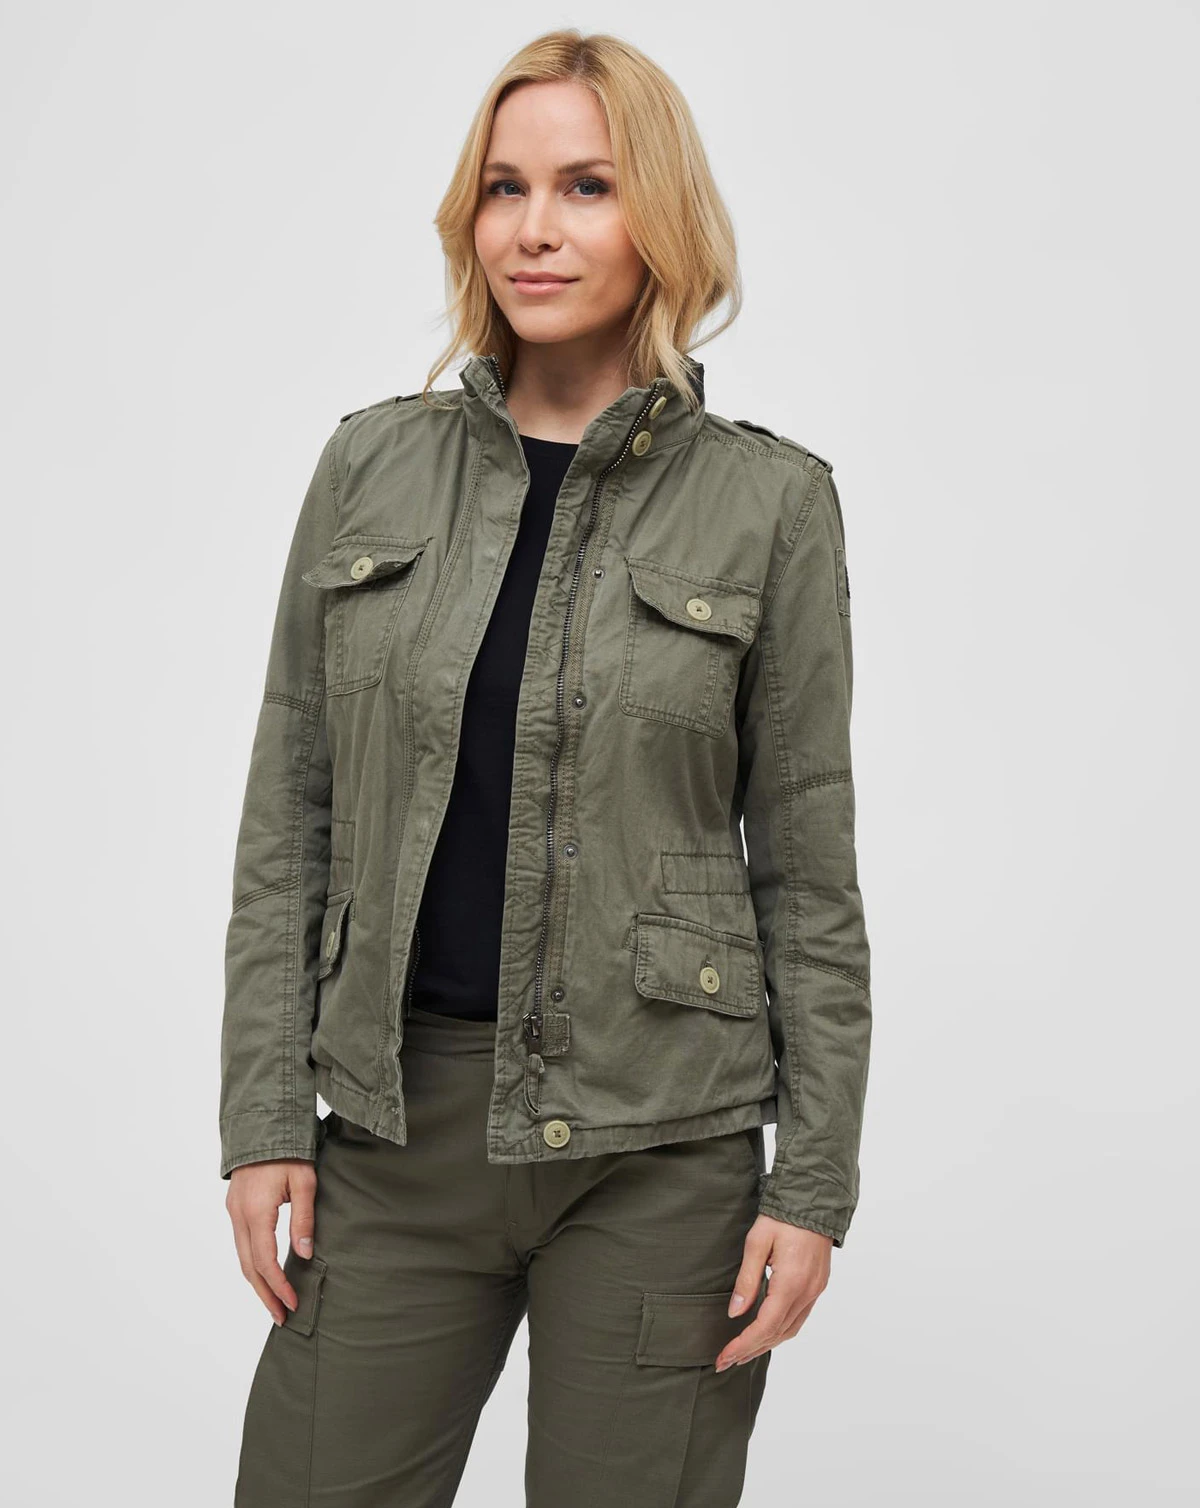 BDU Jackets for women | Battle Dress Uniform Jackets | Army Star